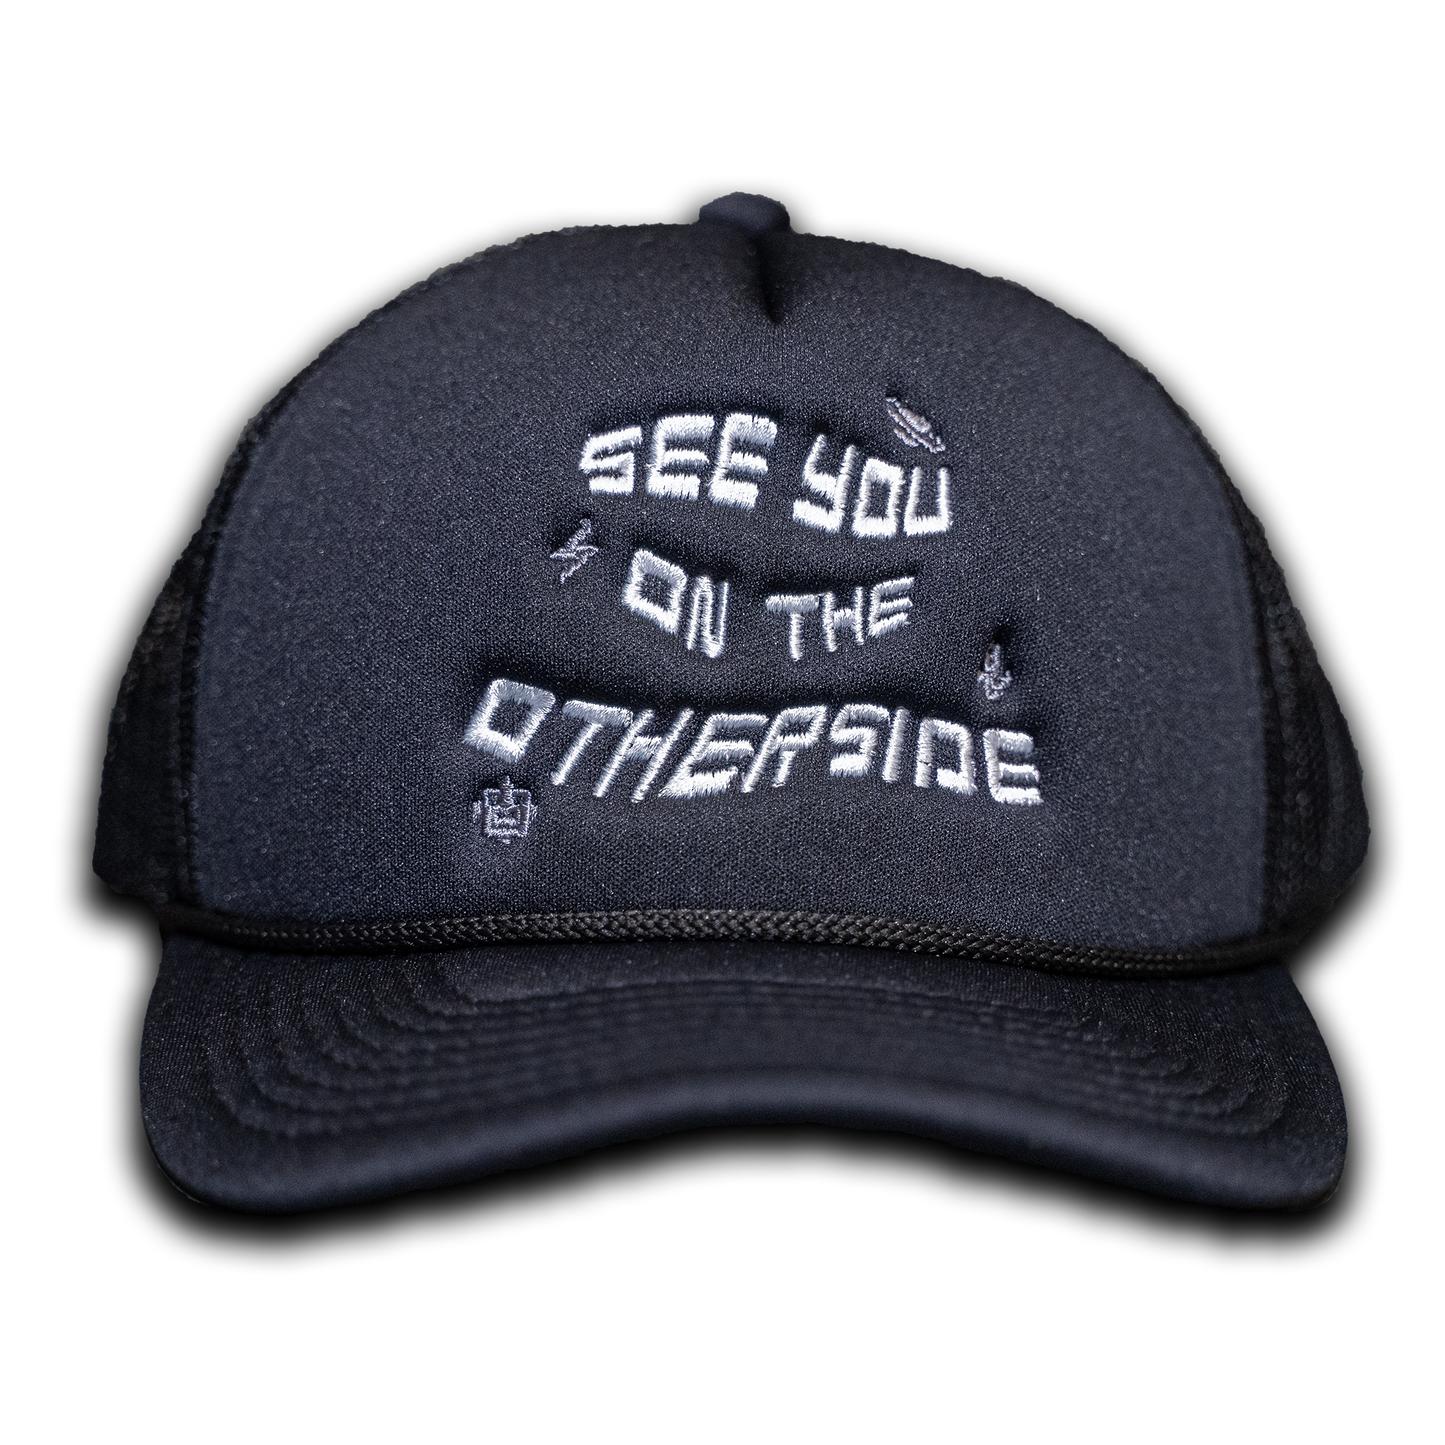 Otherside Trucker Hat Black Project Rare